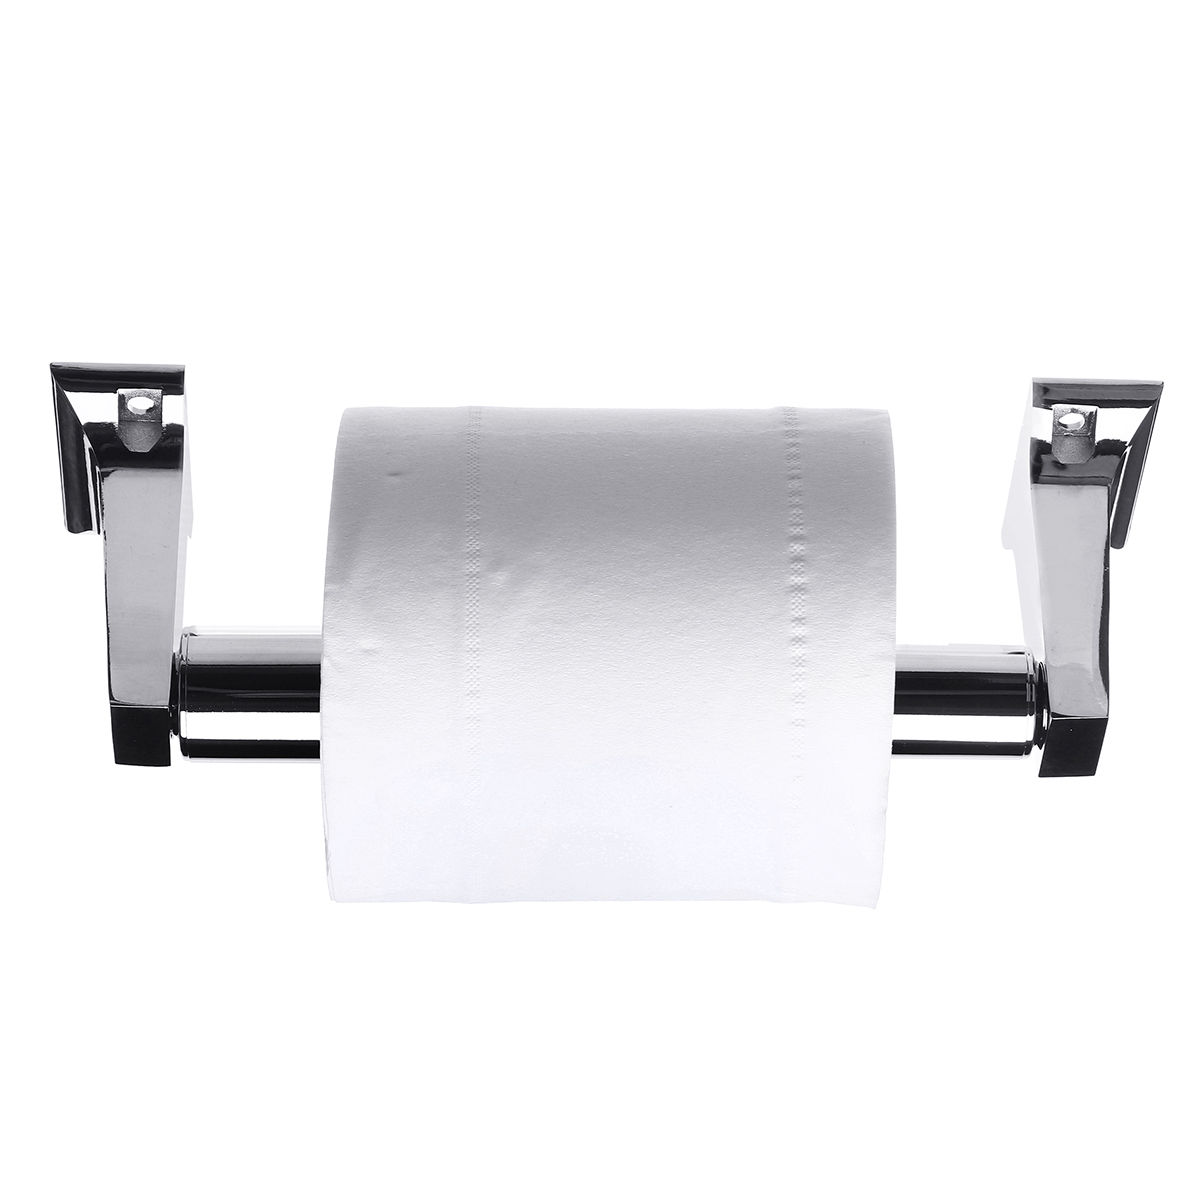 Aluminum-Alloy-Roll-Paper-Shelf-Holder-Telescopic-Tissue-Storage-Organizer-1598369-5